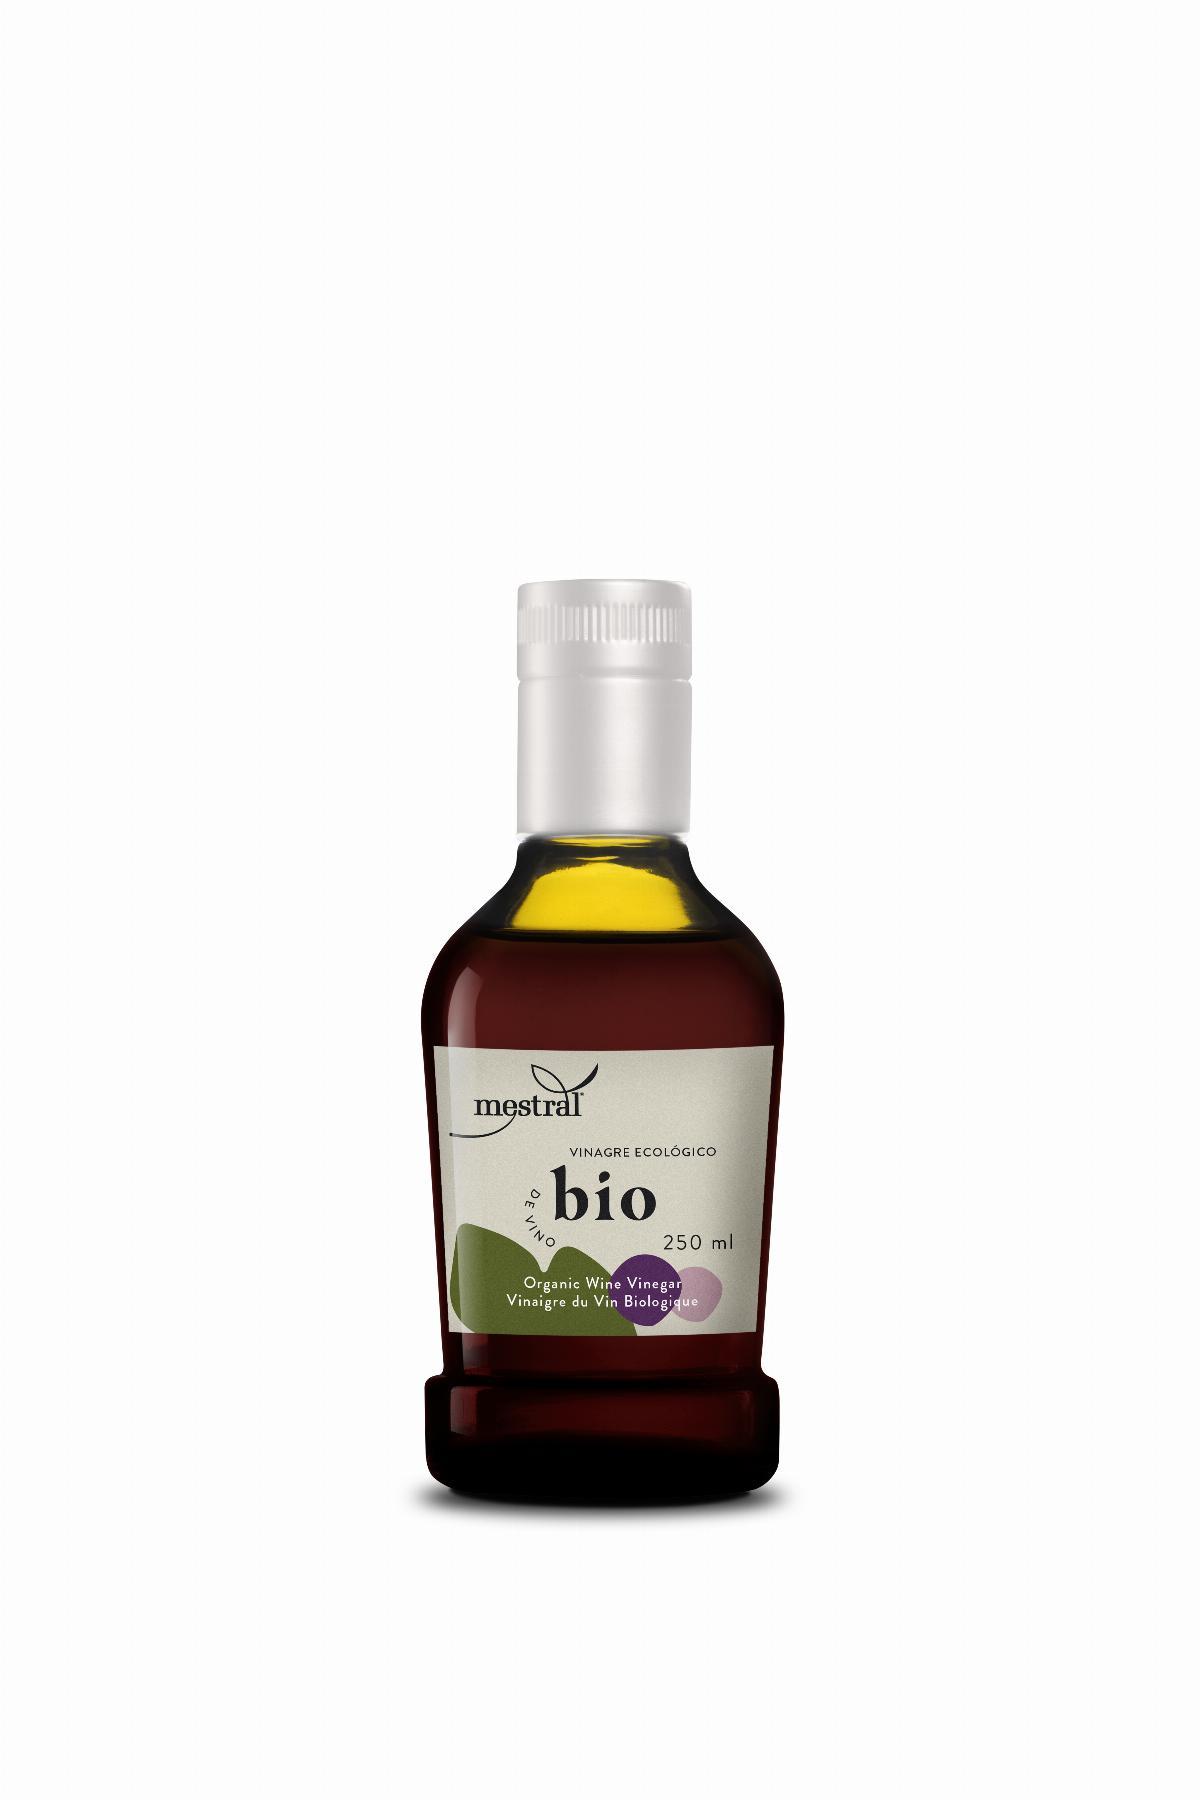 Organic Mestral Wine Vinegar glass bottle 250ml - Operator CT/005725/E Controled by ES-ECO-019-CT. UE Farming